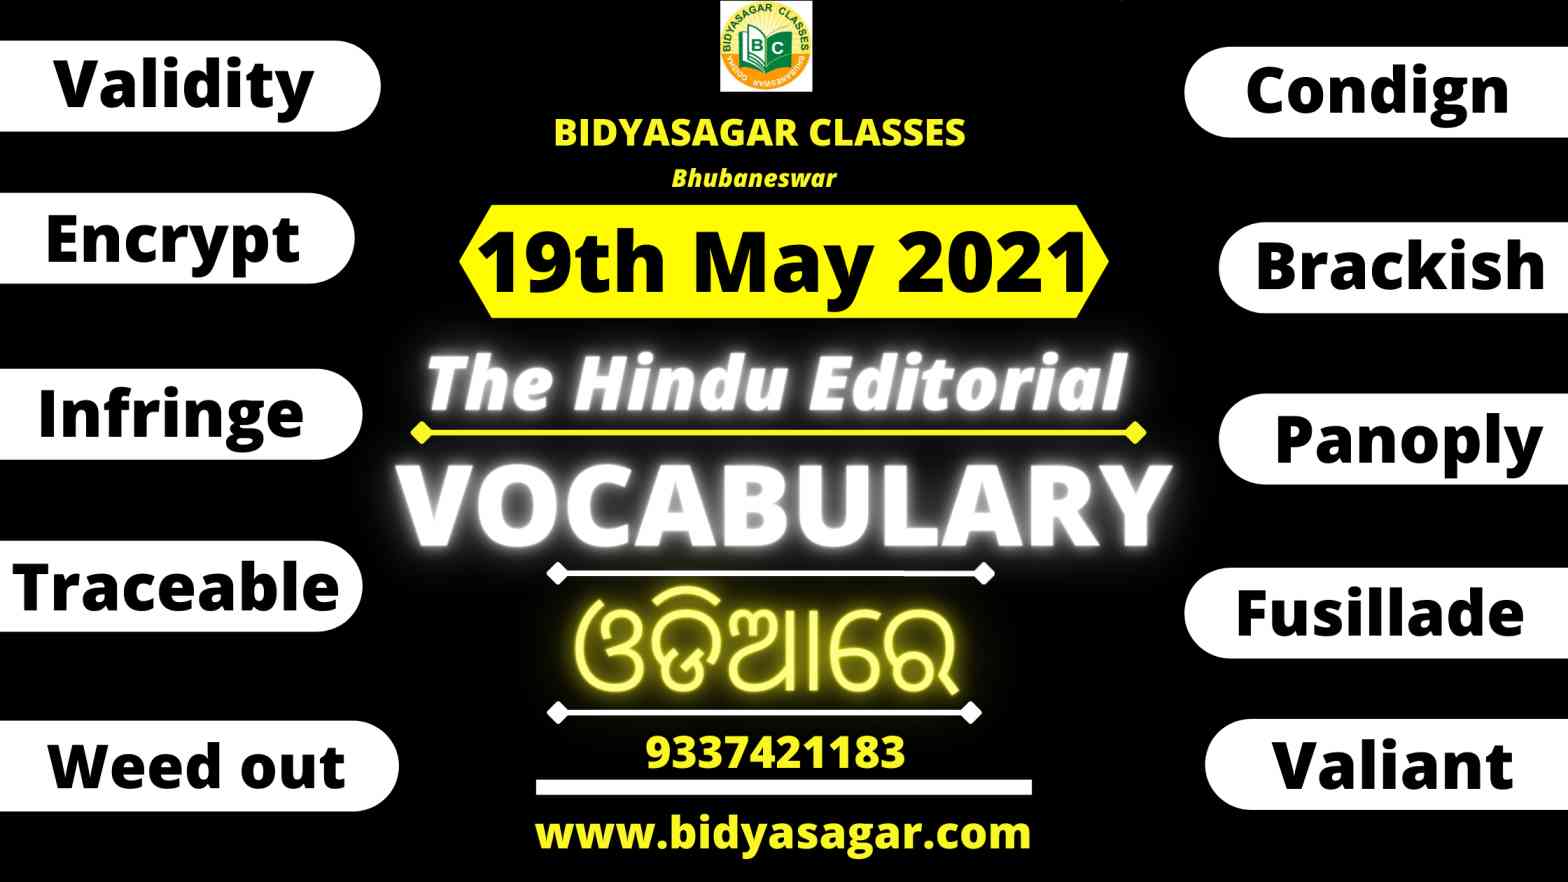 The Hindu Editorial Vocabulary of 19th May 2021